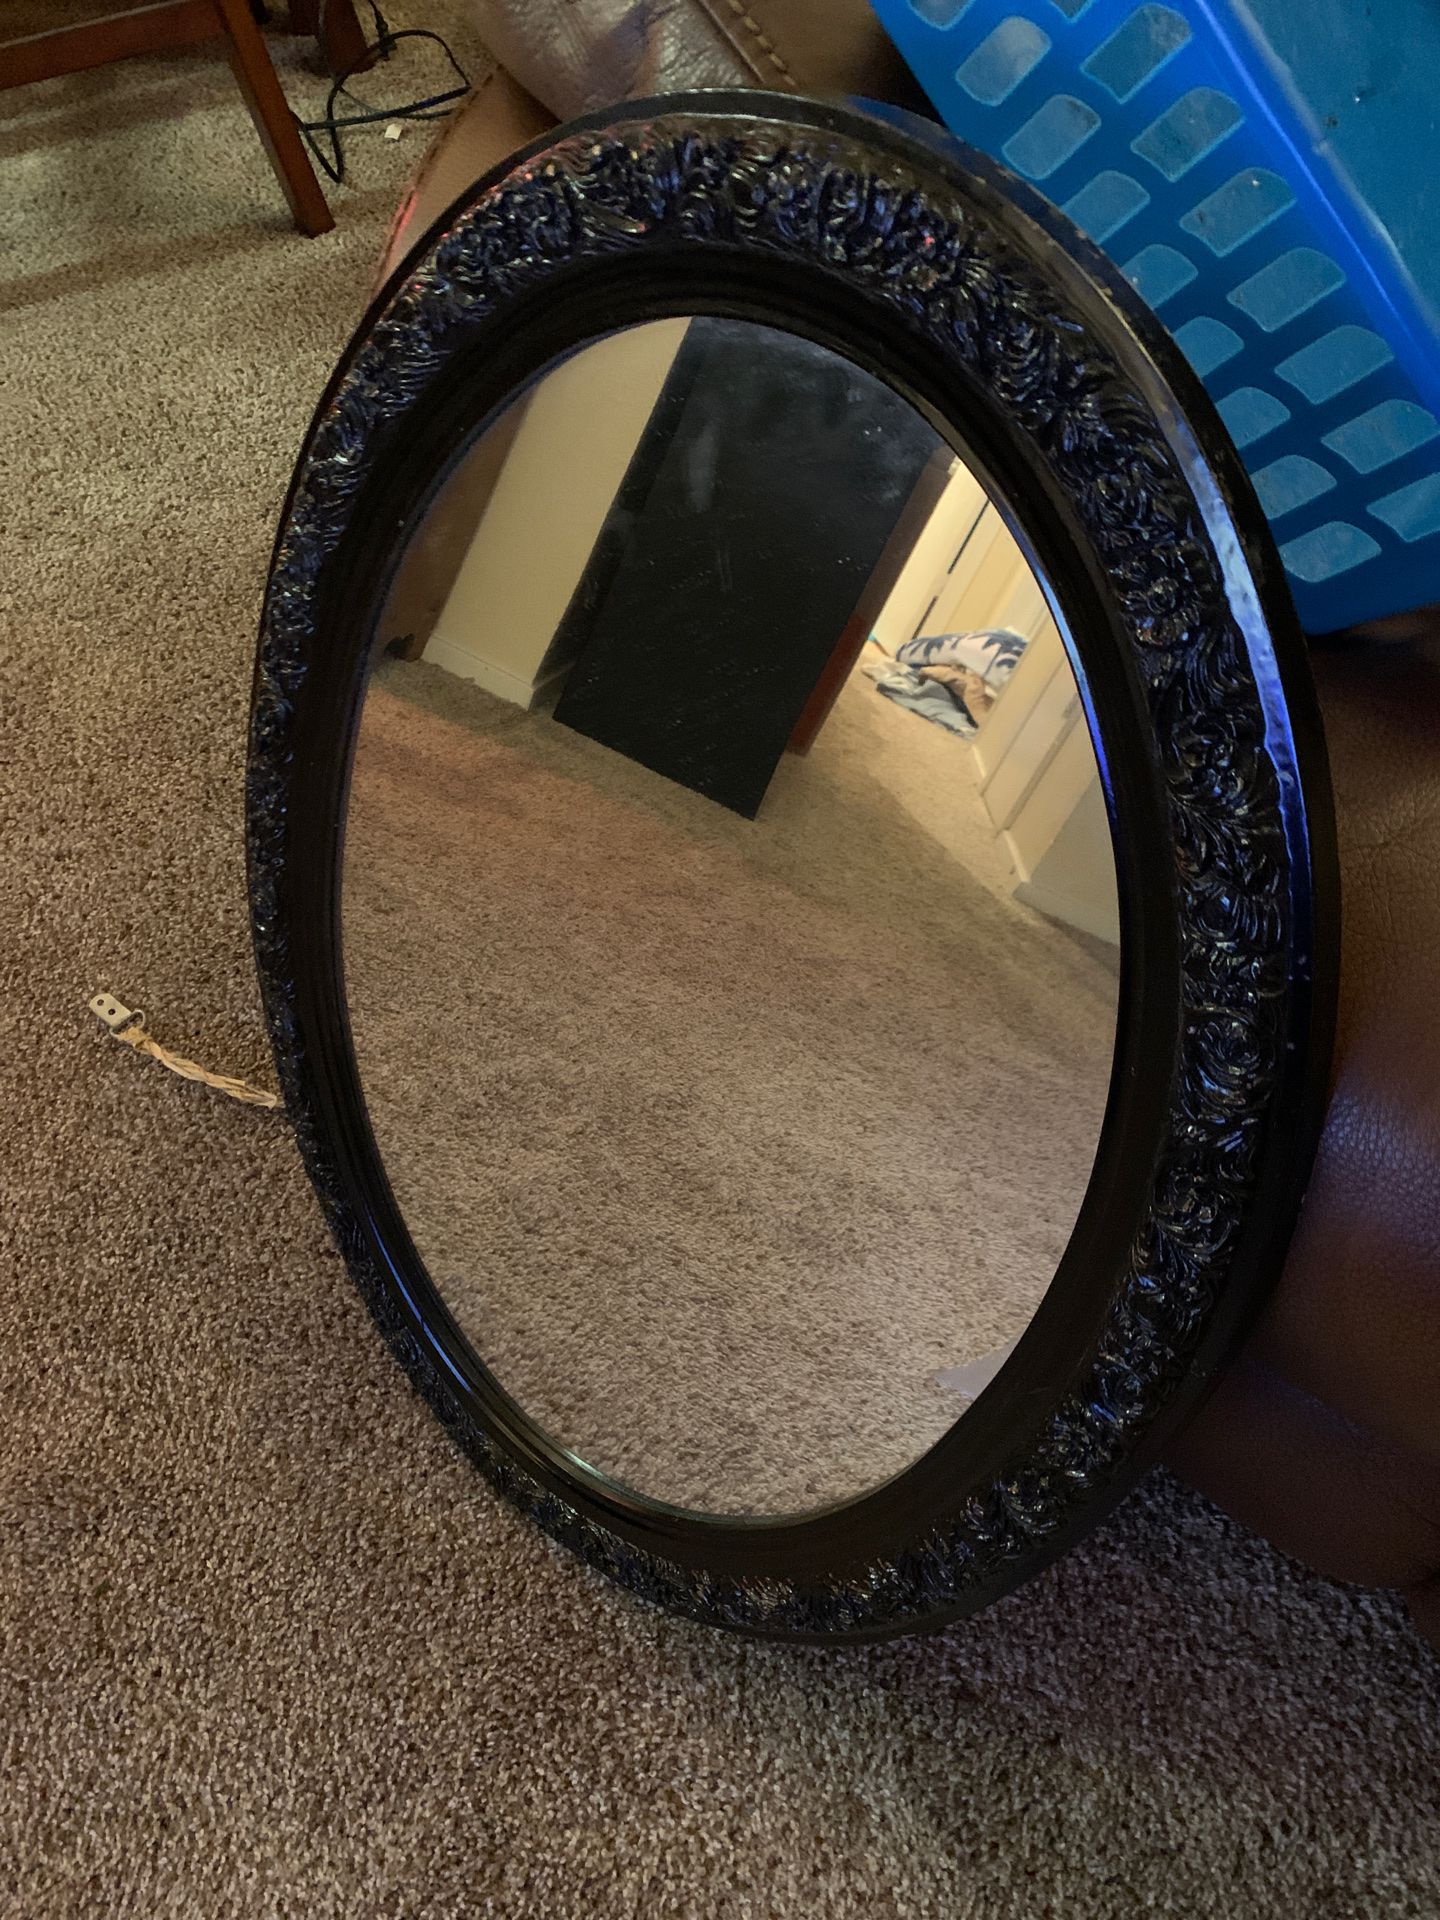 Oval black mirror